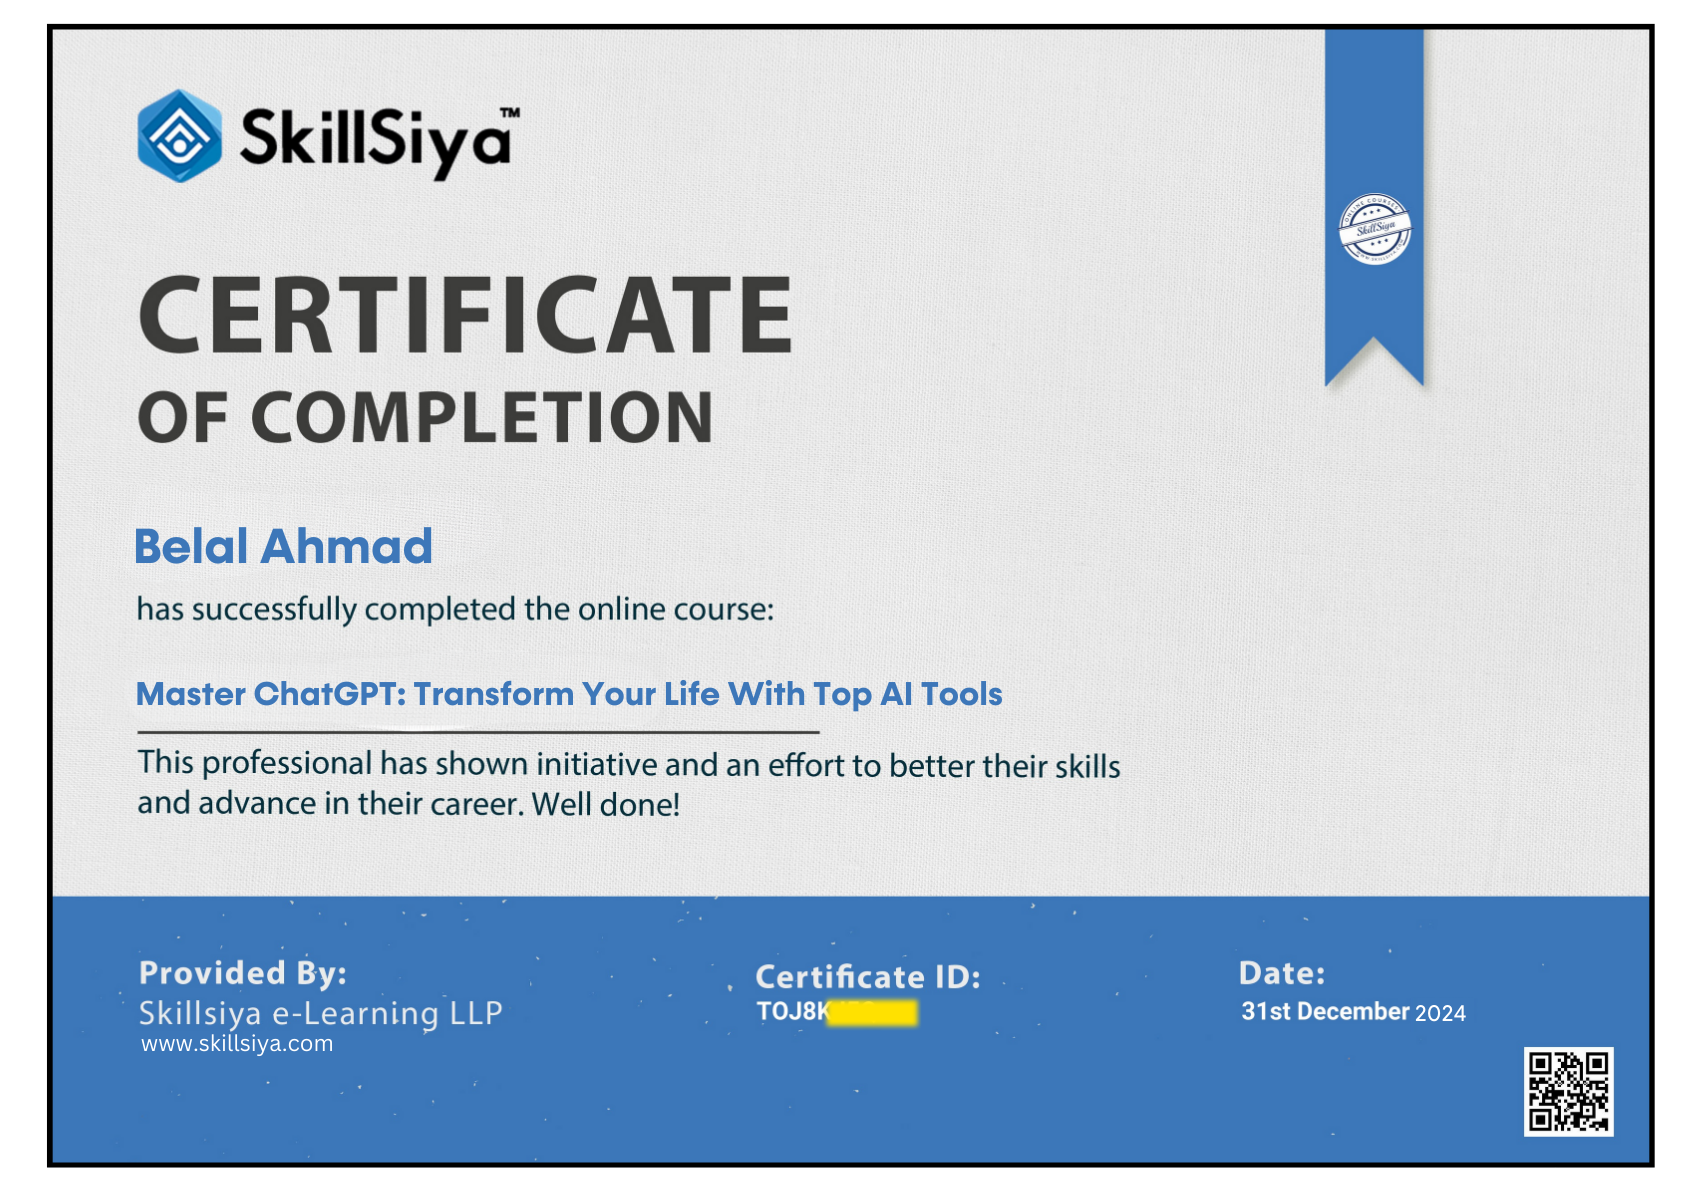 skillsiya certificate